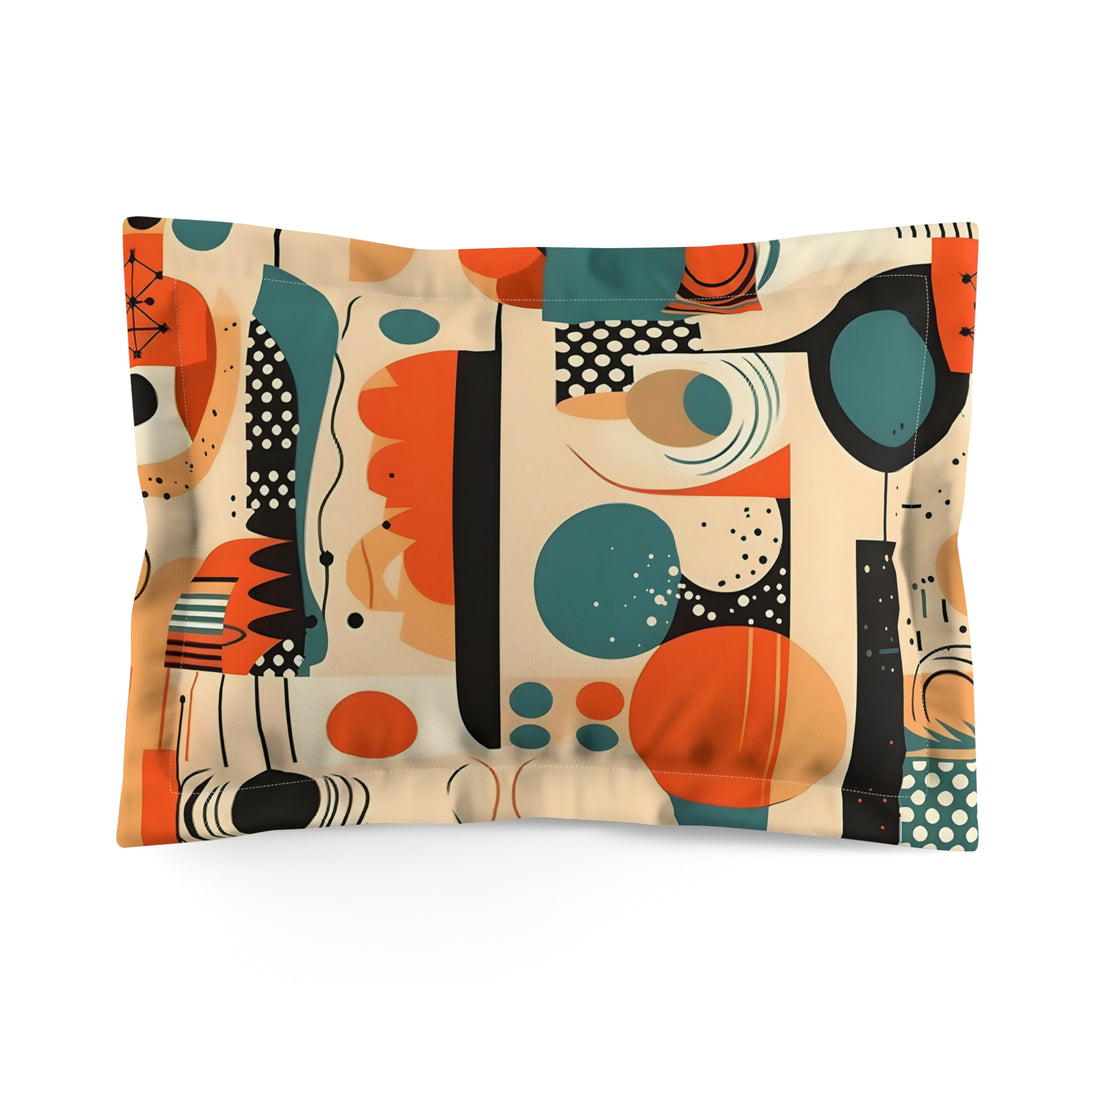 Mid Century Modern Bauhaus Bedding Pillow Sham, Orange, Teal, Abstract Designs